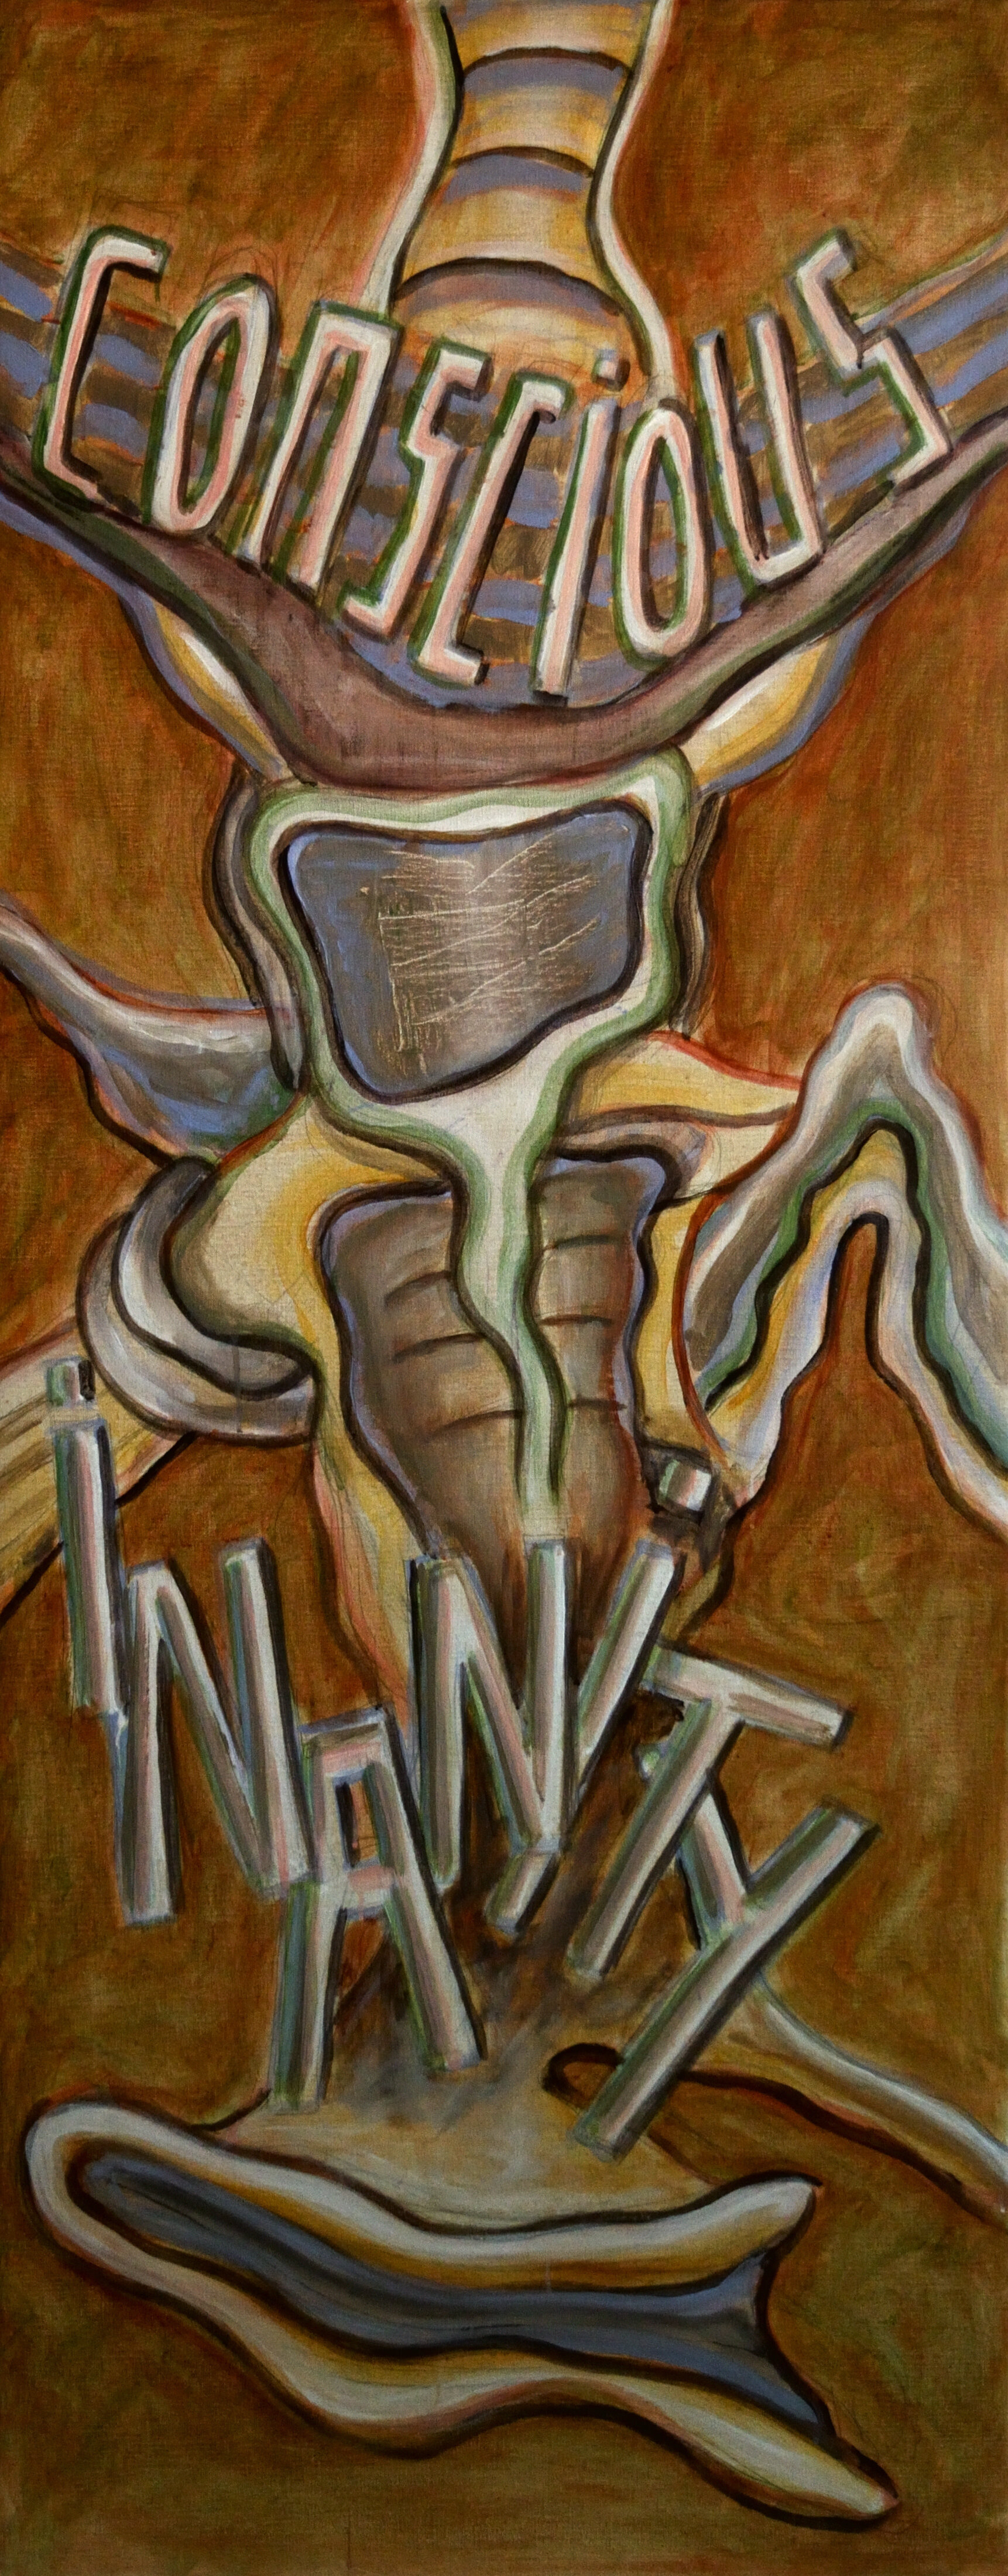 Conscious Inanity, acrylic on canvas, 150x60cm